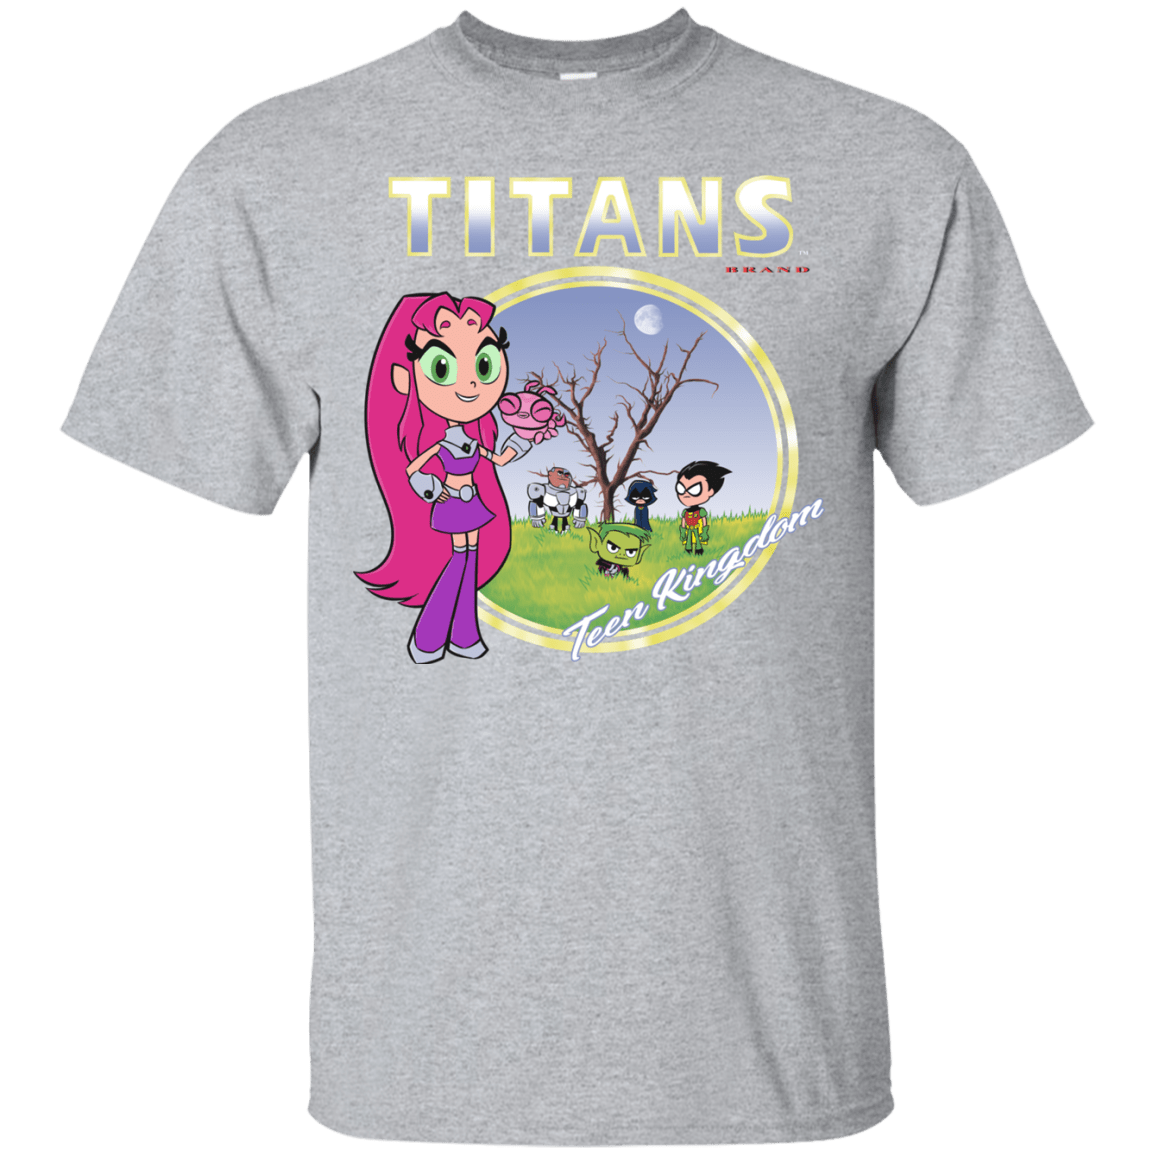 T-Shirts Sport Grey / S Titans T-Shirt